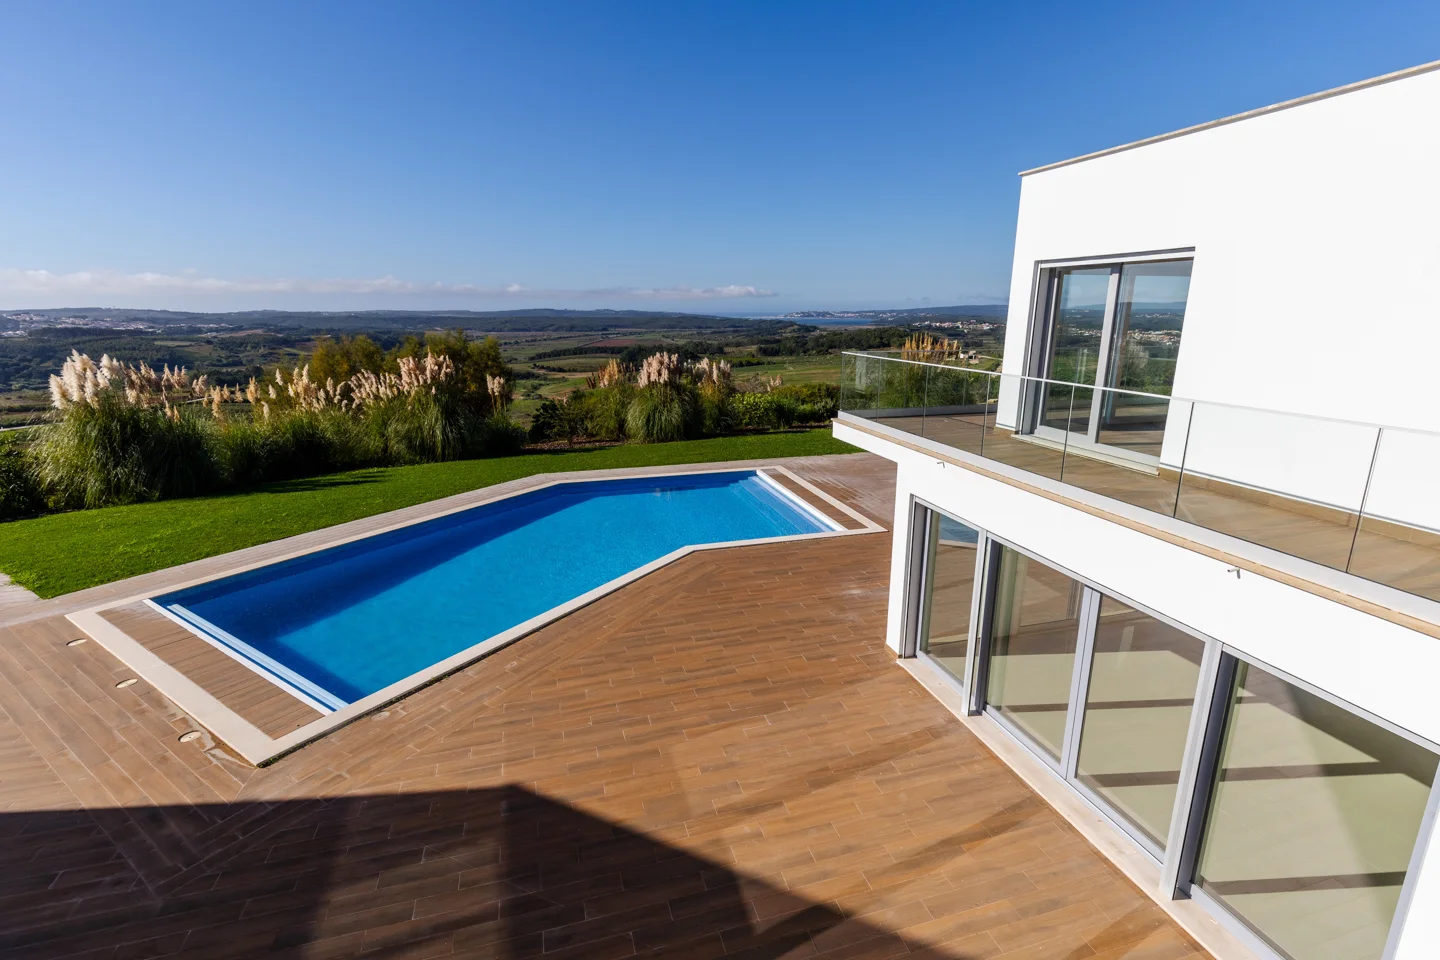 4 Bedroom Villa with panoramic views of the Óbidos lagoon